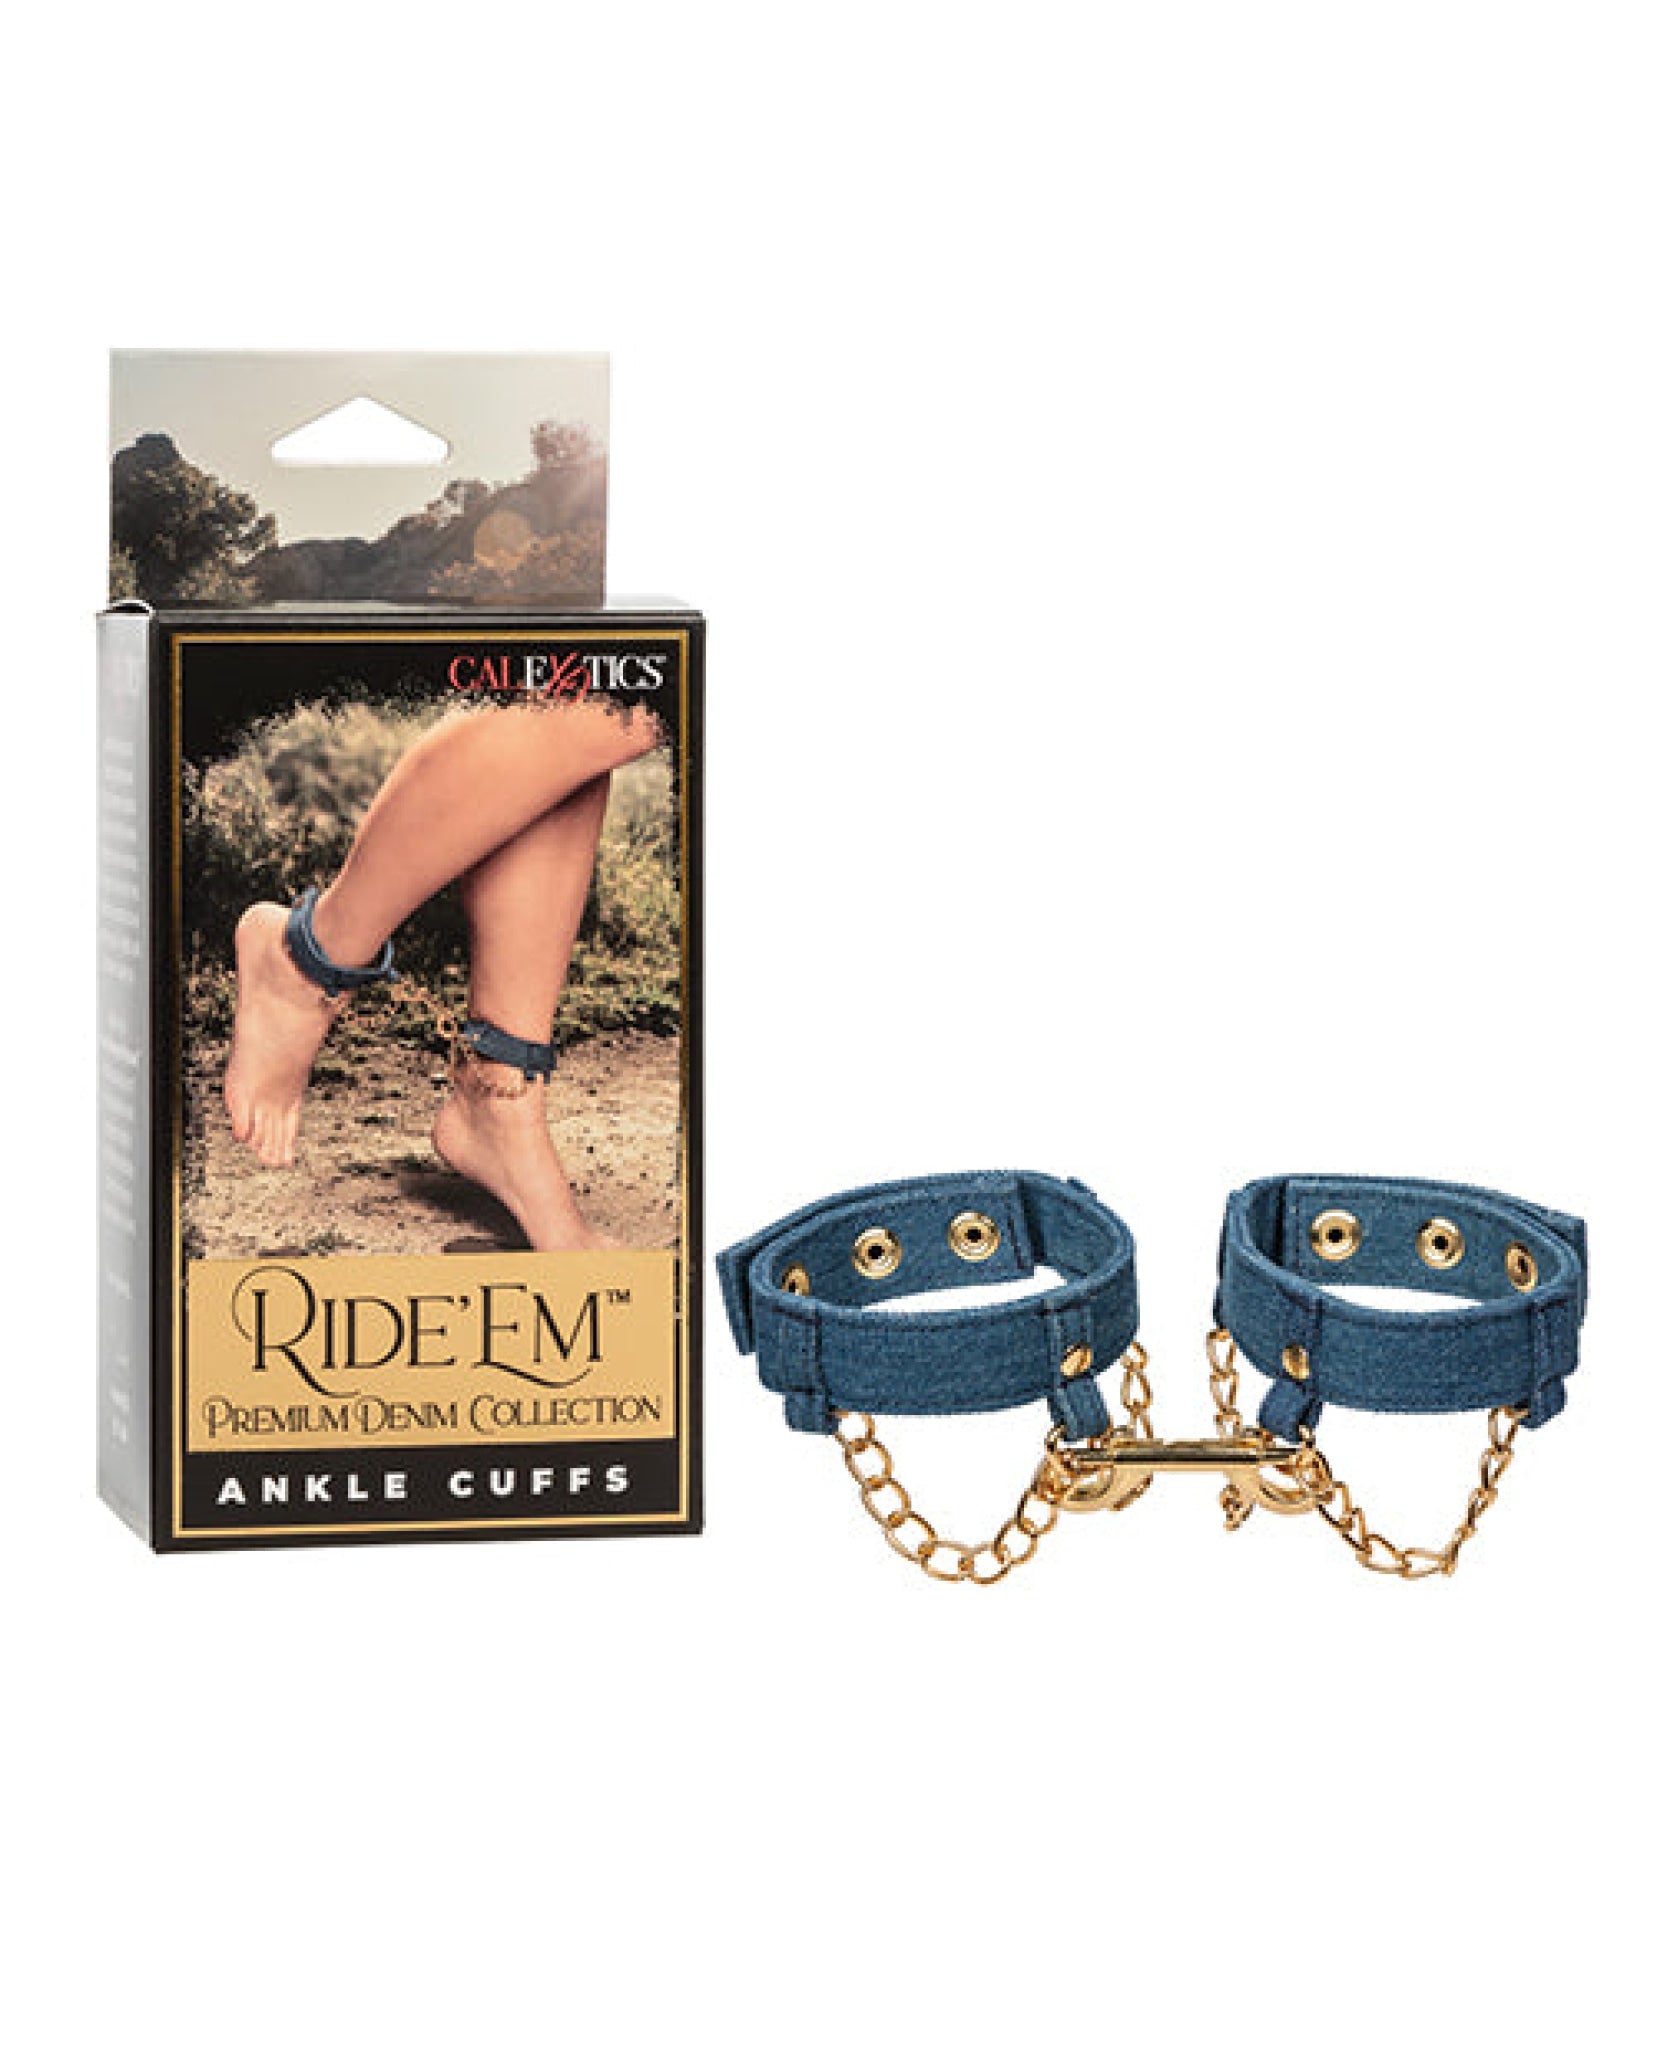 Ride 'em Premium Denim Collection Ankle Cuffs California Exotic Novelties